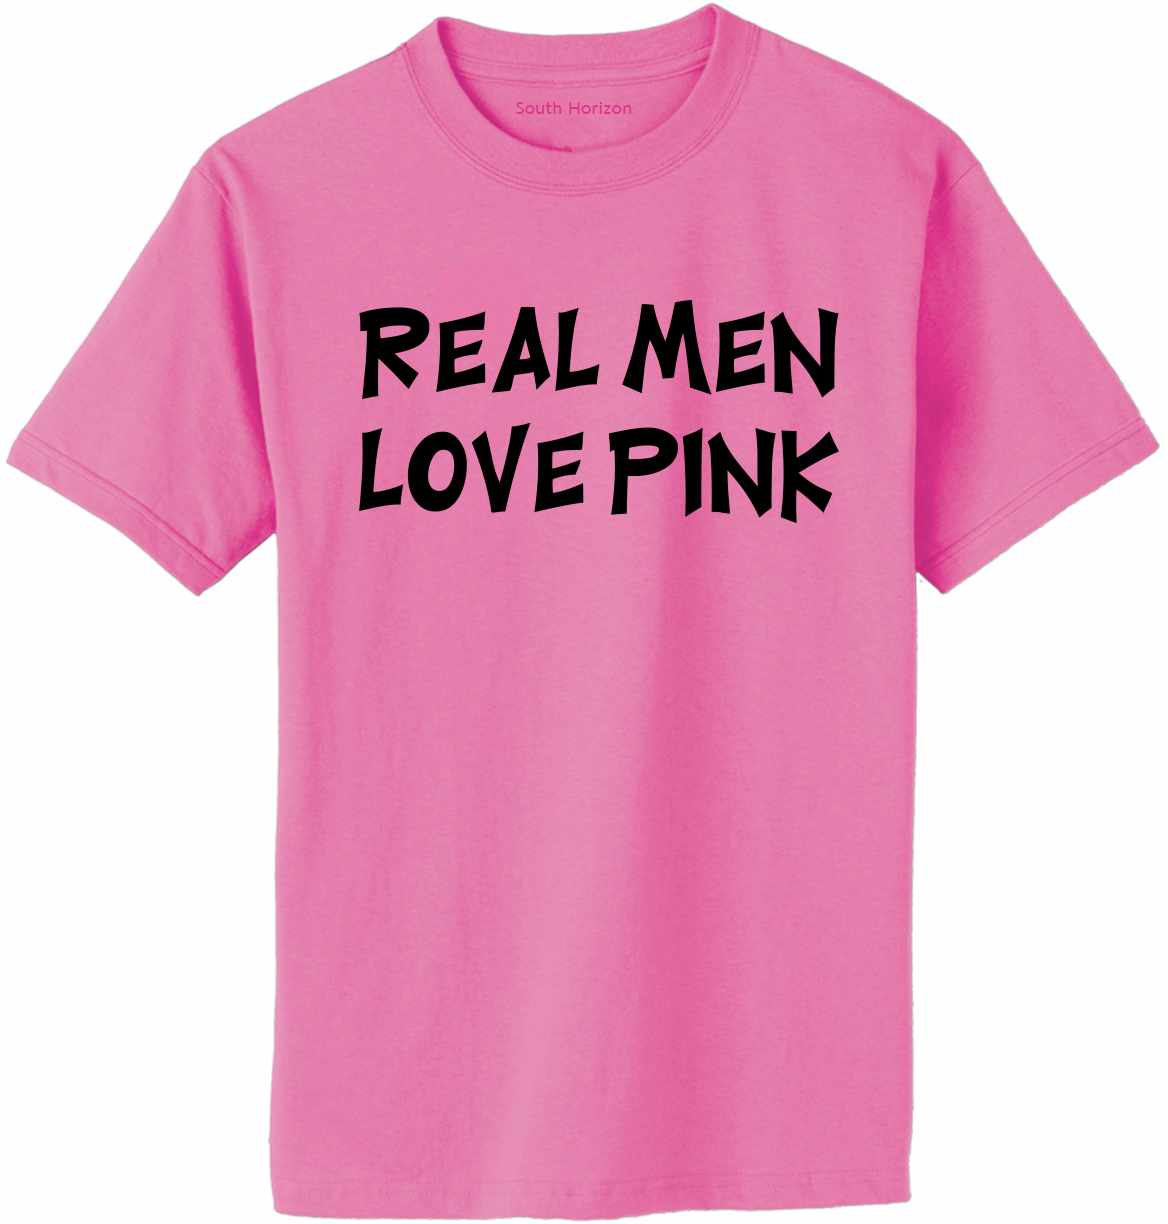 Real Men Love Pink Adult T-Shirt